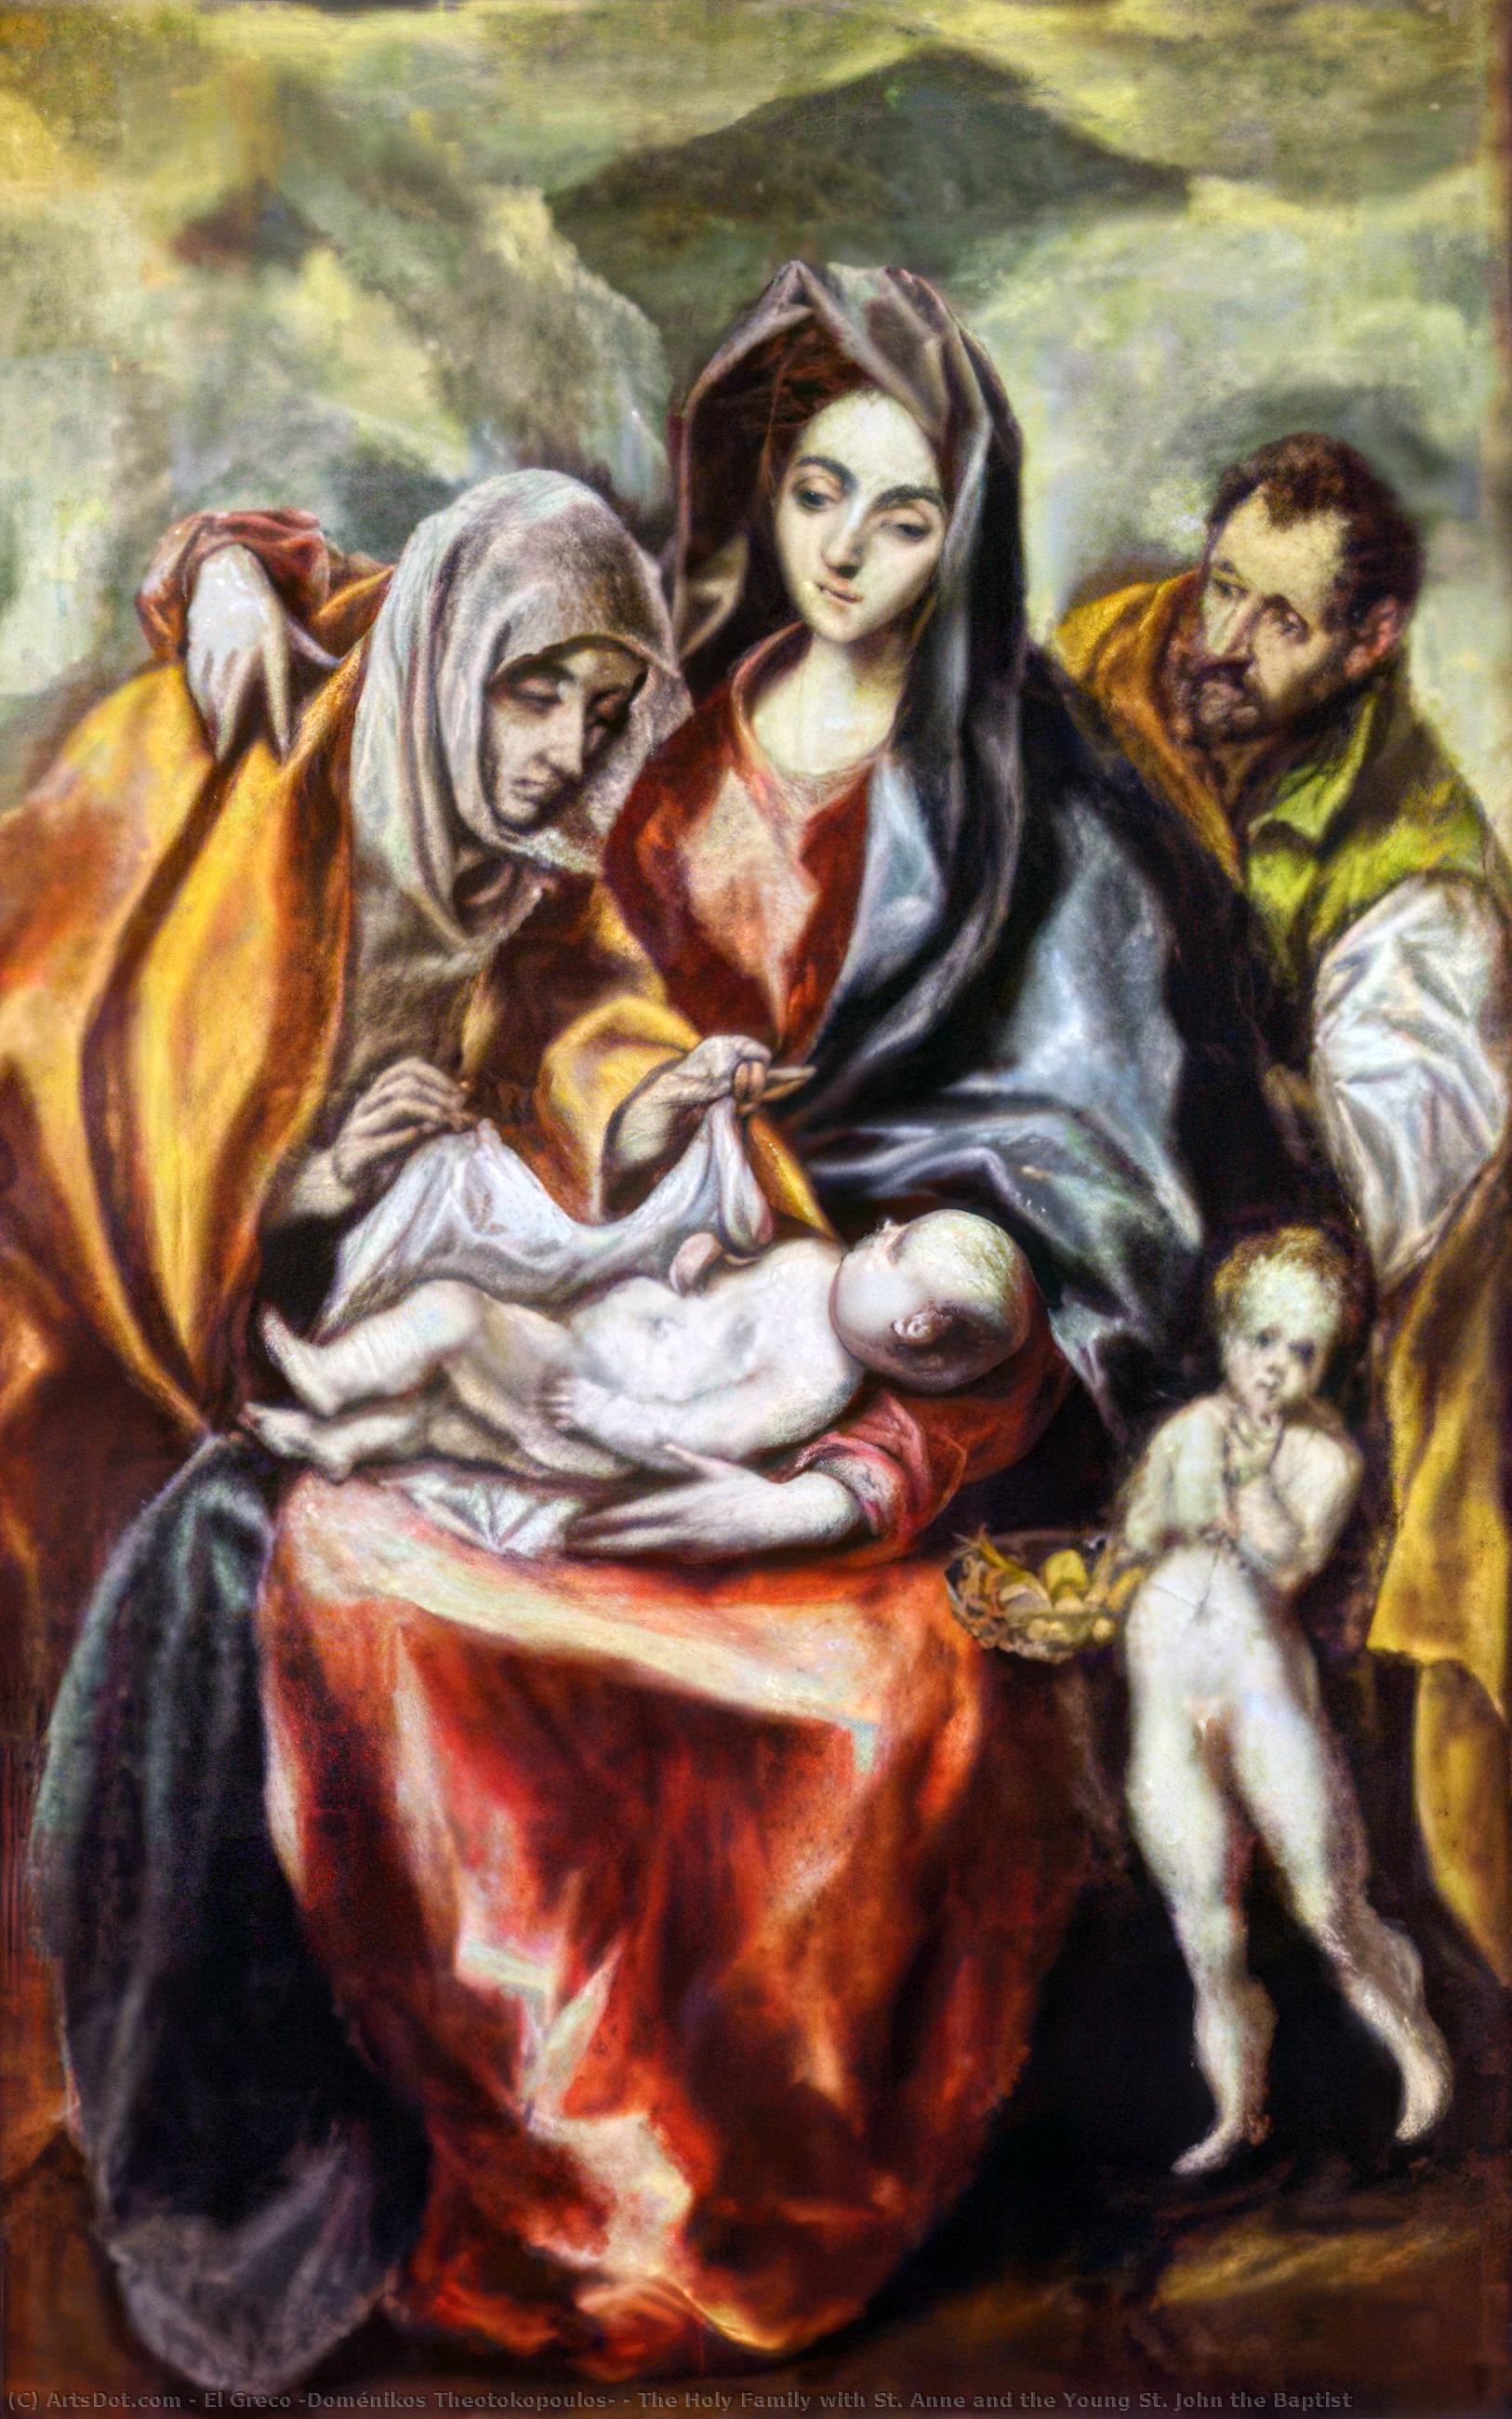 WikiOO.org - Enciklopedija likovnih umjetnosti - Slikarstvo, umjetnička djela El Greco (Doménikos Theotokopoulos) - The Holy Family with St. Anne and the Young St. John the Baptist